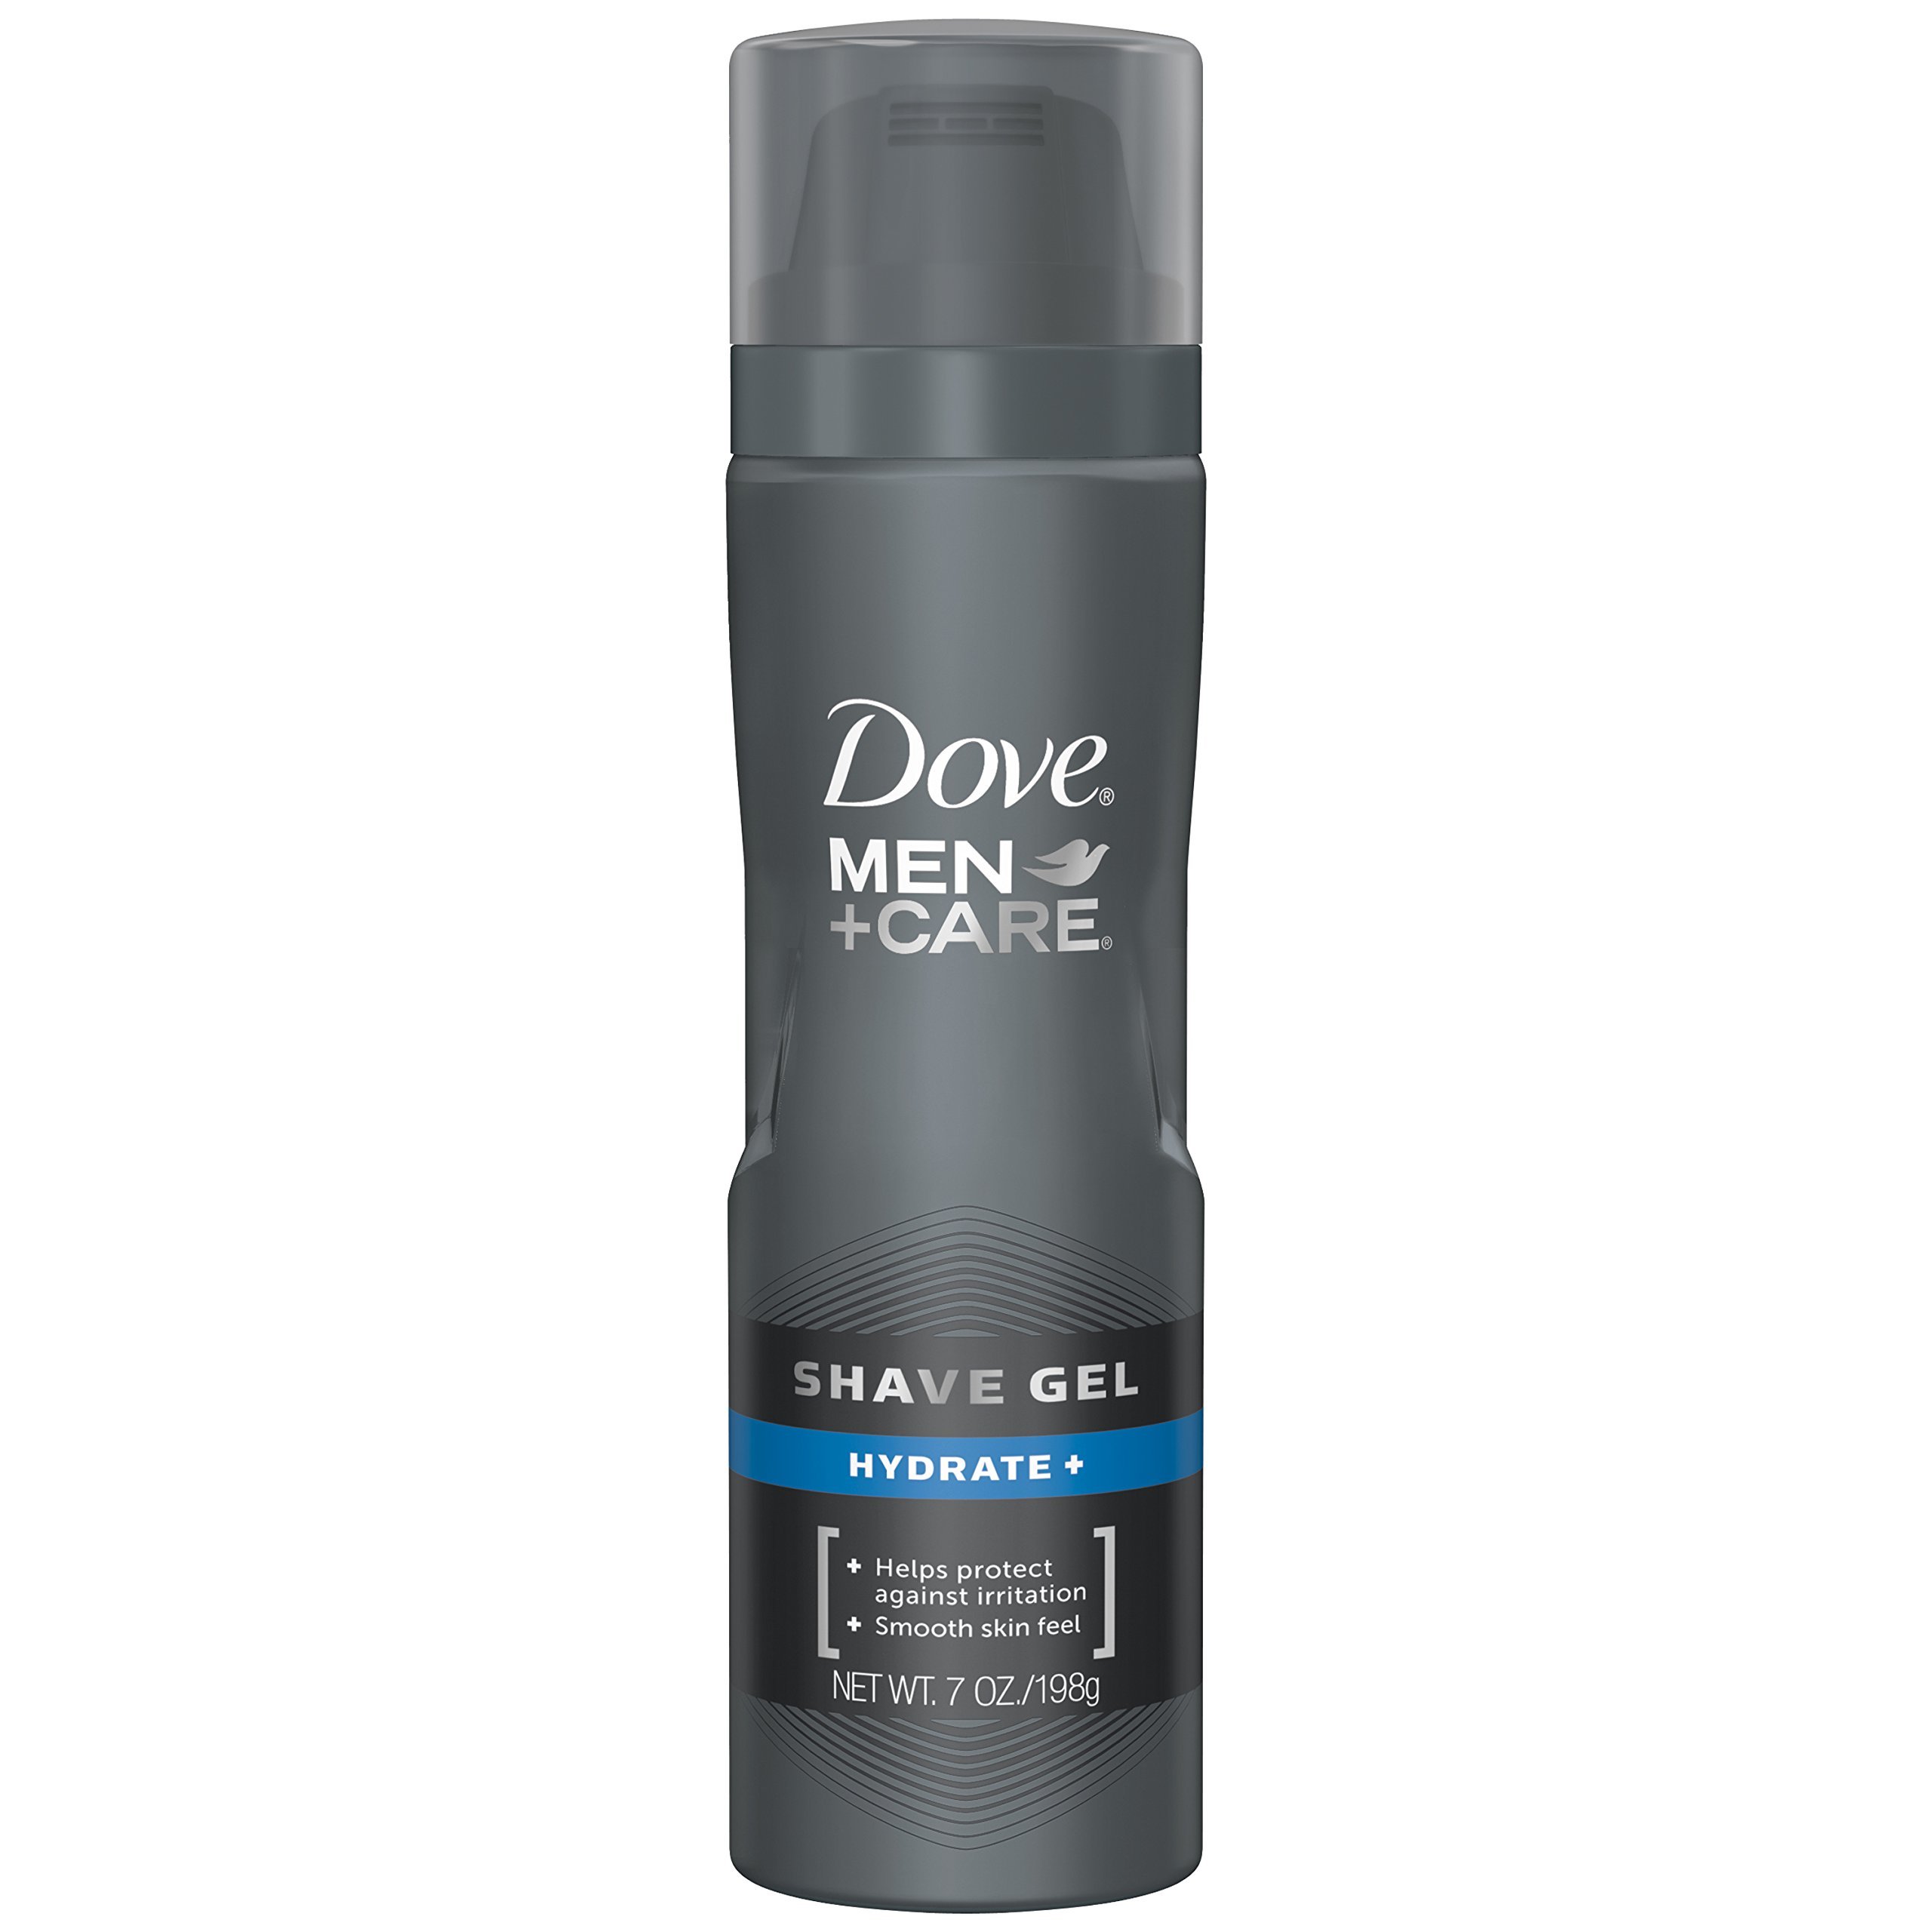 Dove Men + Care Dove Men+Care Shave Gel, Hydrate Plus 7 oz